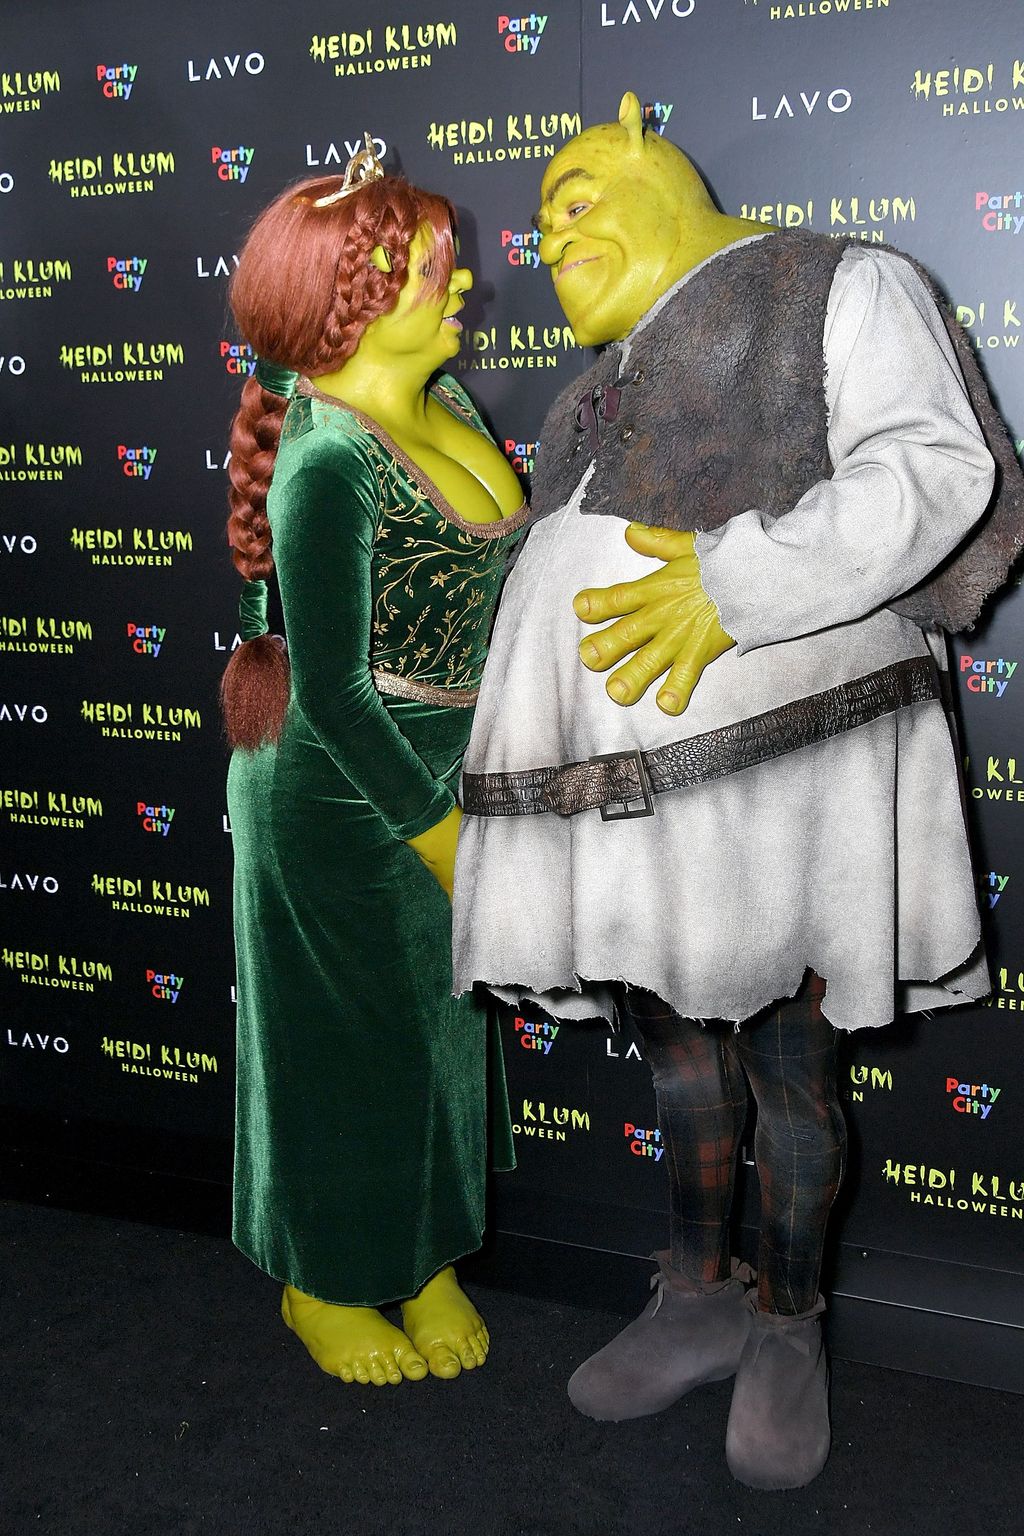 NEW YORK, NY - OCTOBER 31:  Heidi Klum shows up dressed as Princess Fiona from 